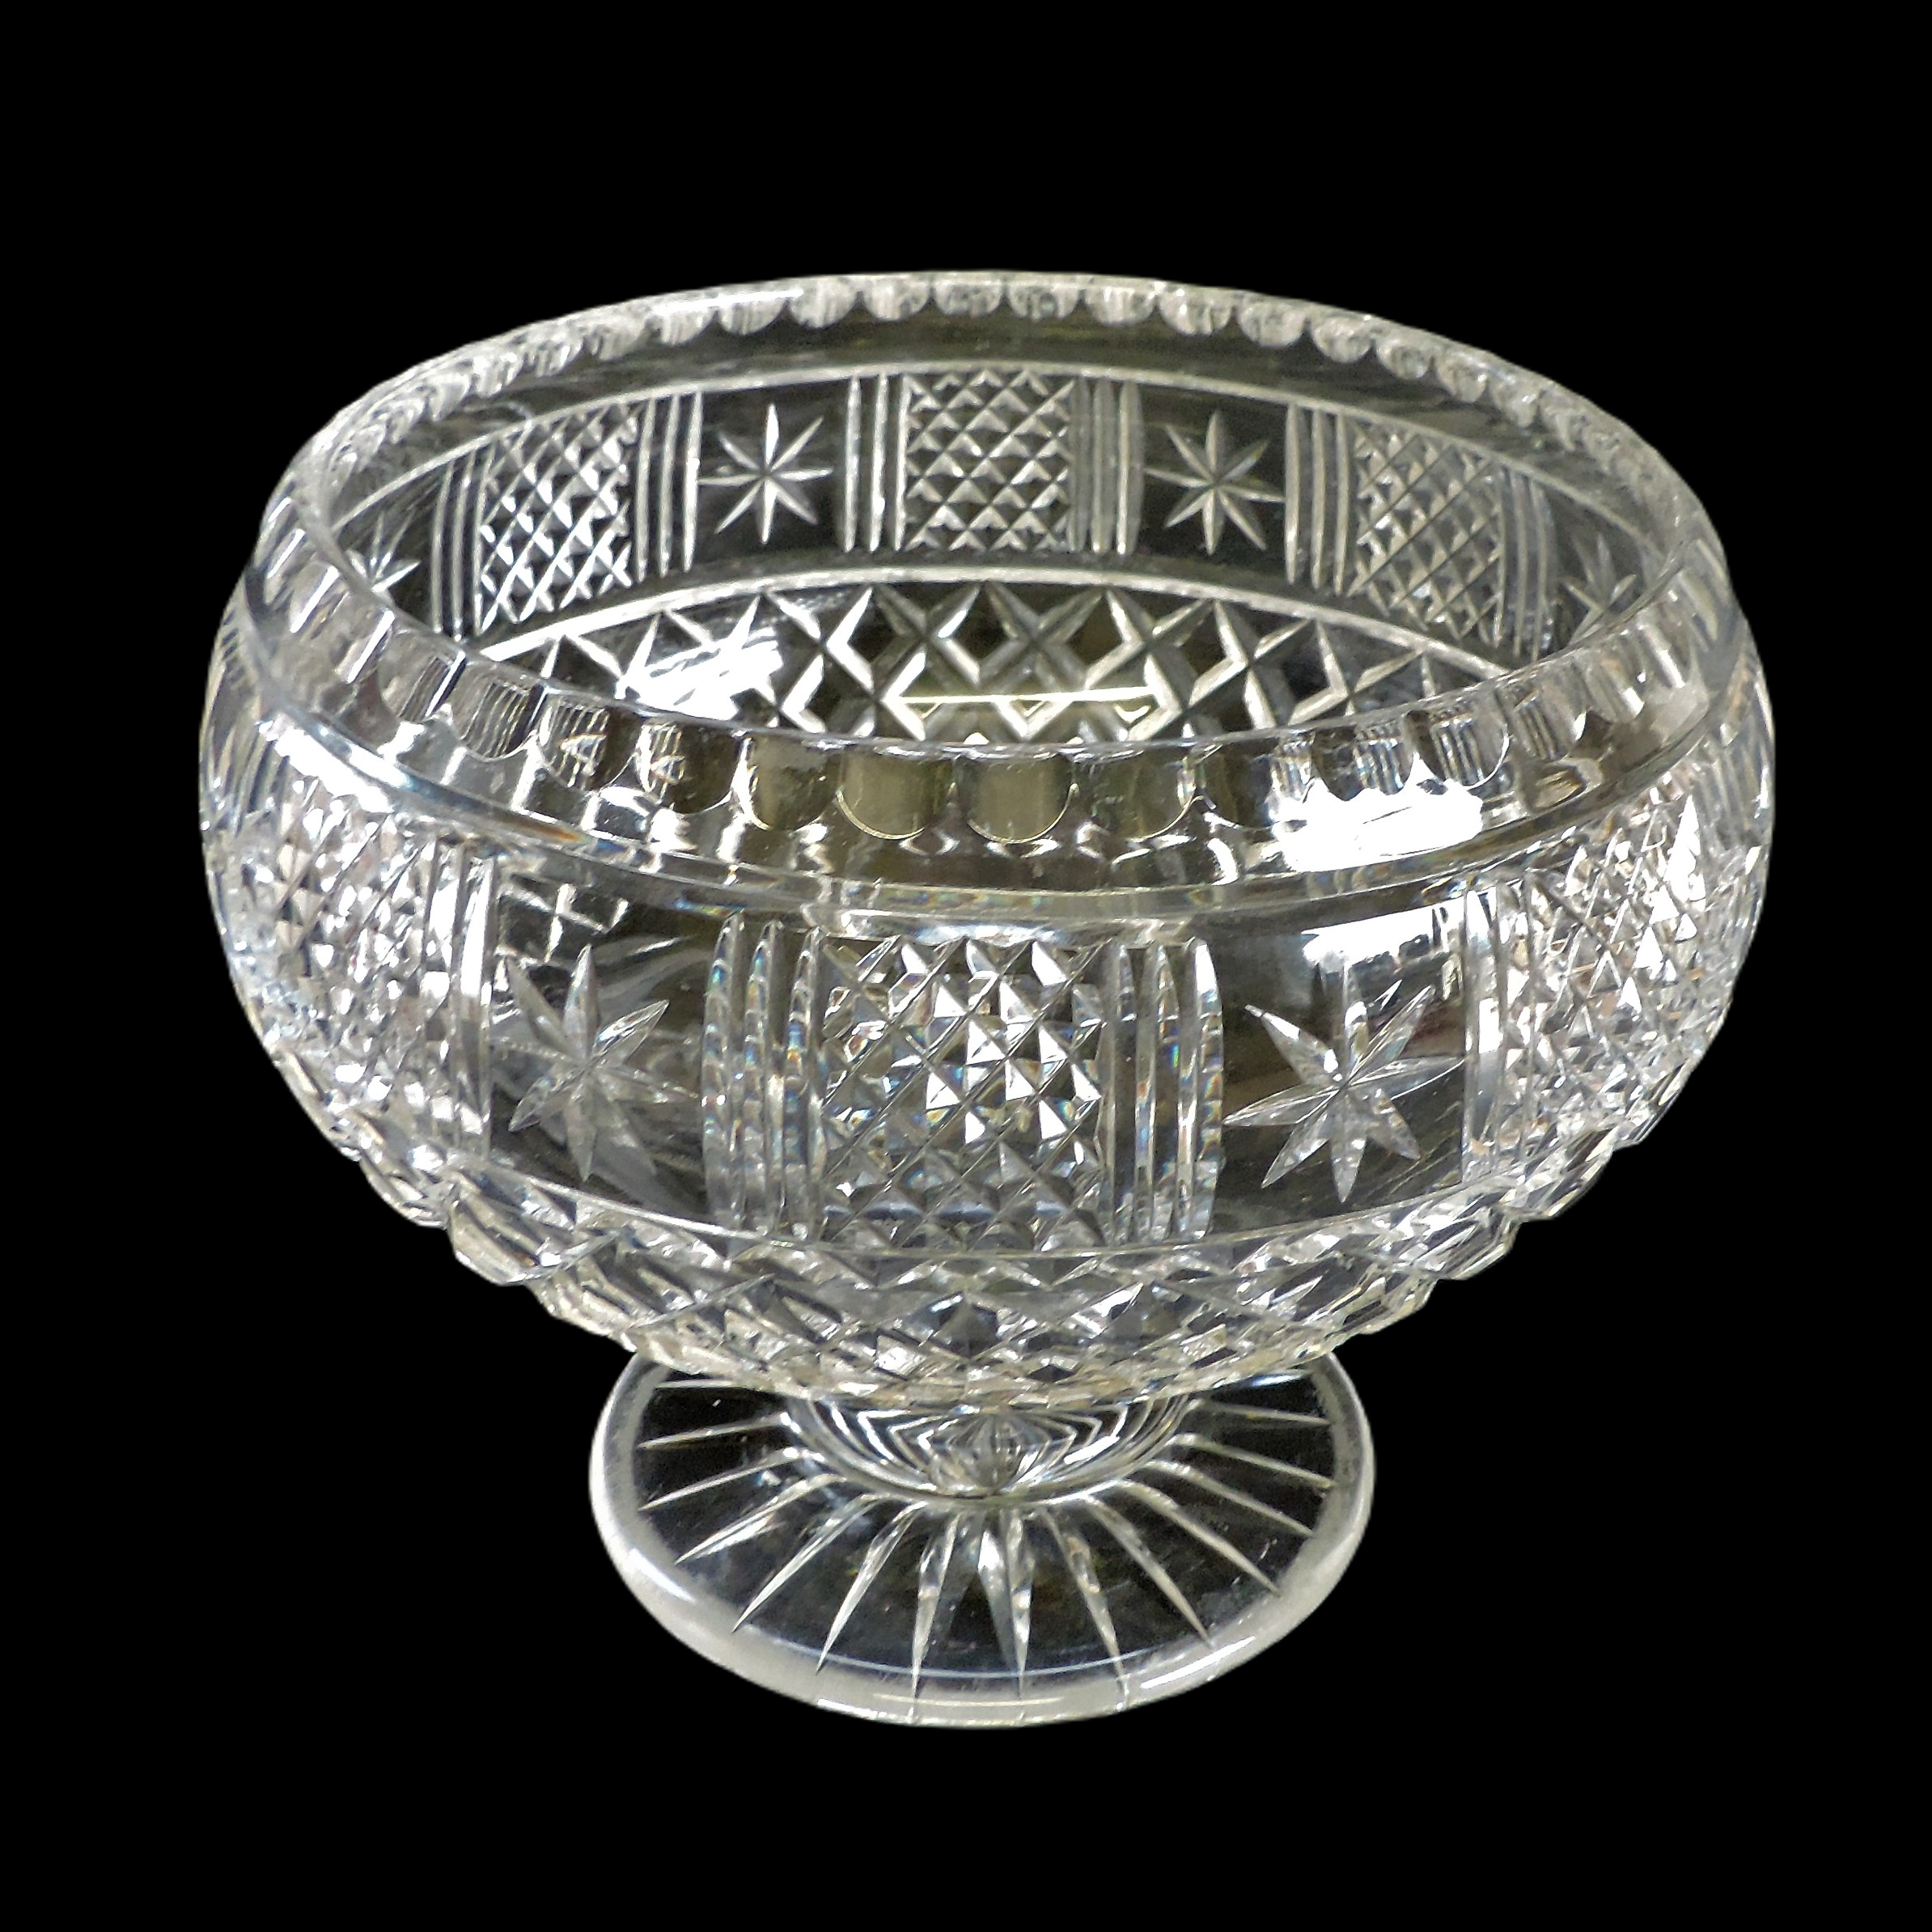 Large Antique Hand Cut Crystal Pedestal Bowl - Image 3 of 7